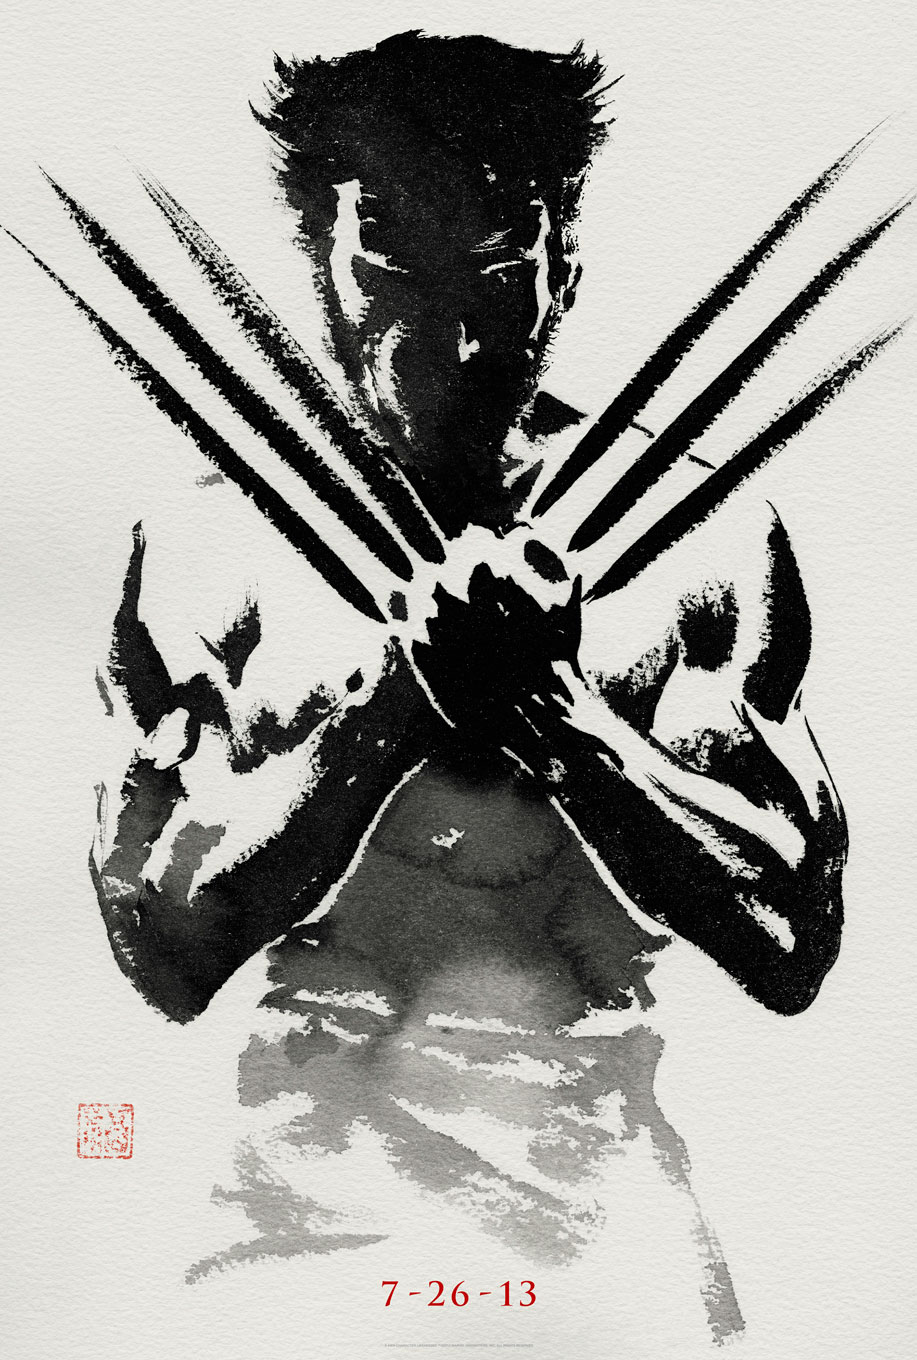 2013-07-30 The Wolverine